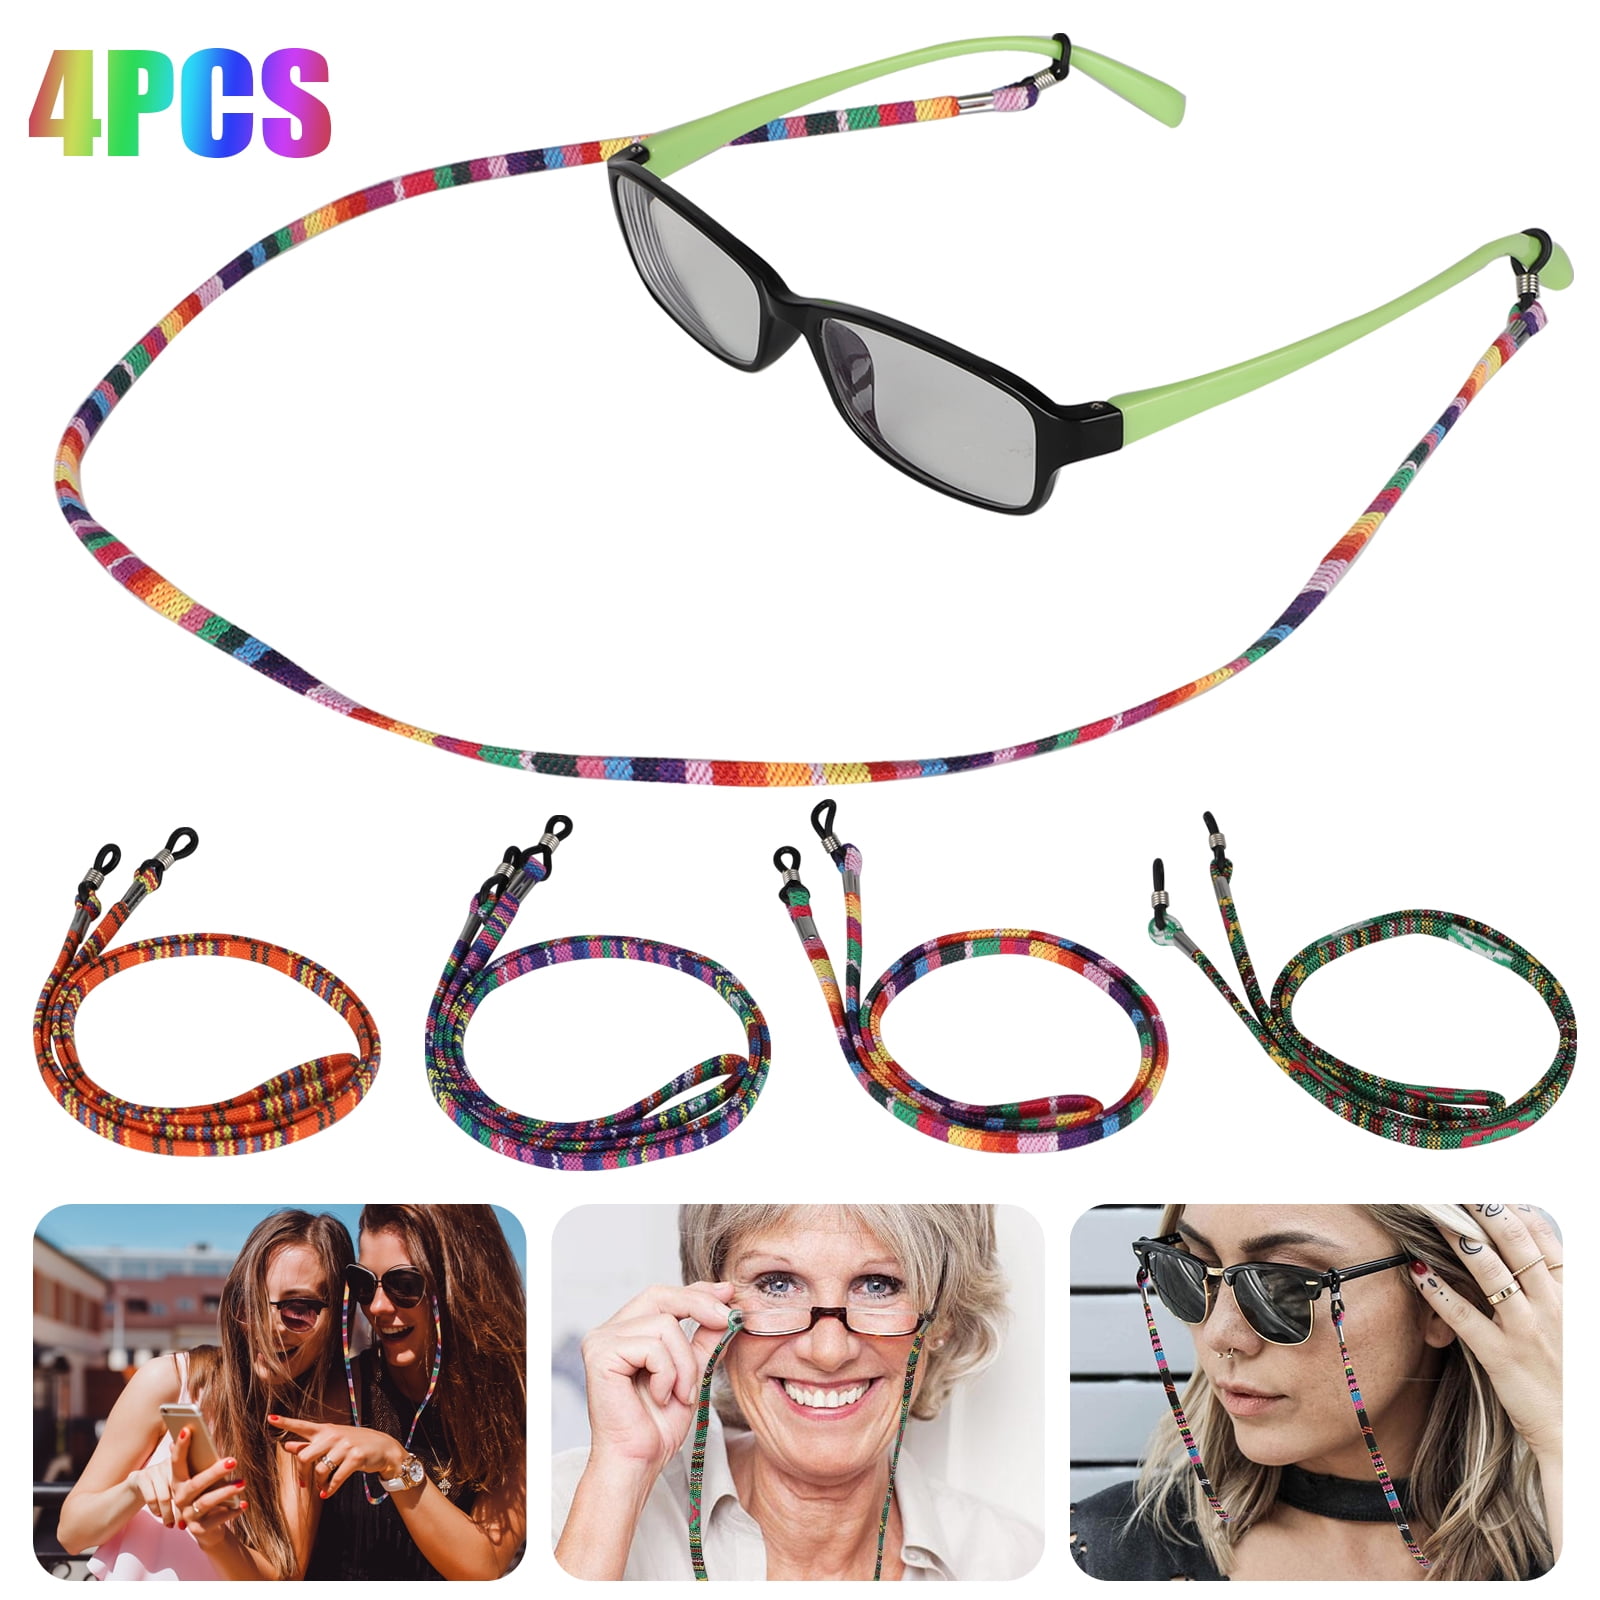 guanjunLI Eyeglasses Chain Spectacles Sunglass Holder Glasses Cords Strap Eyewear Retainer 